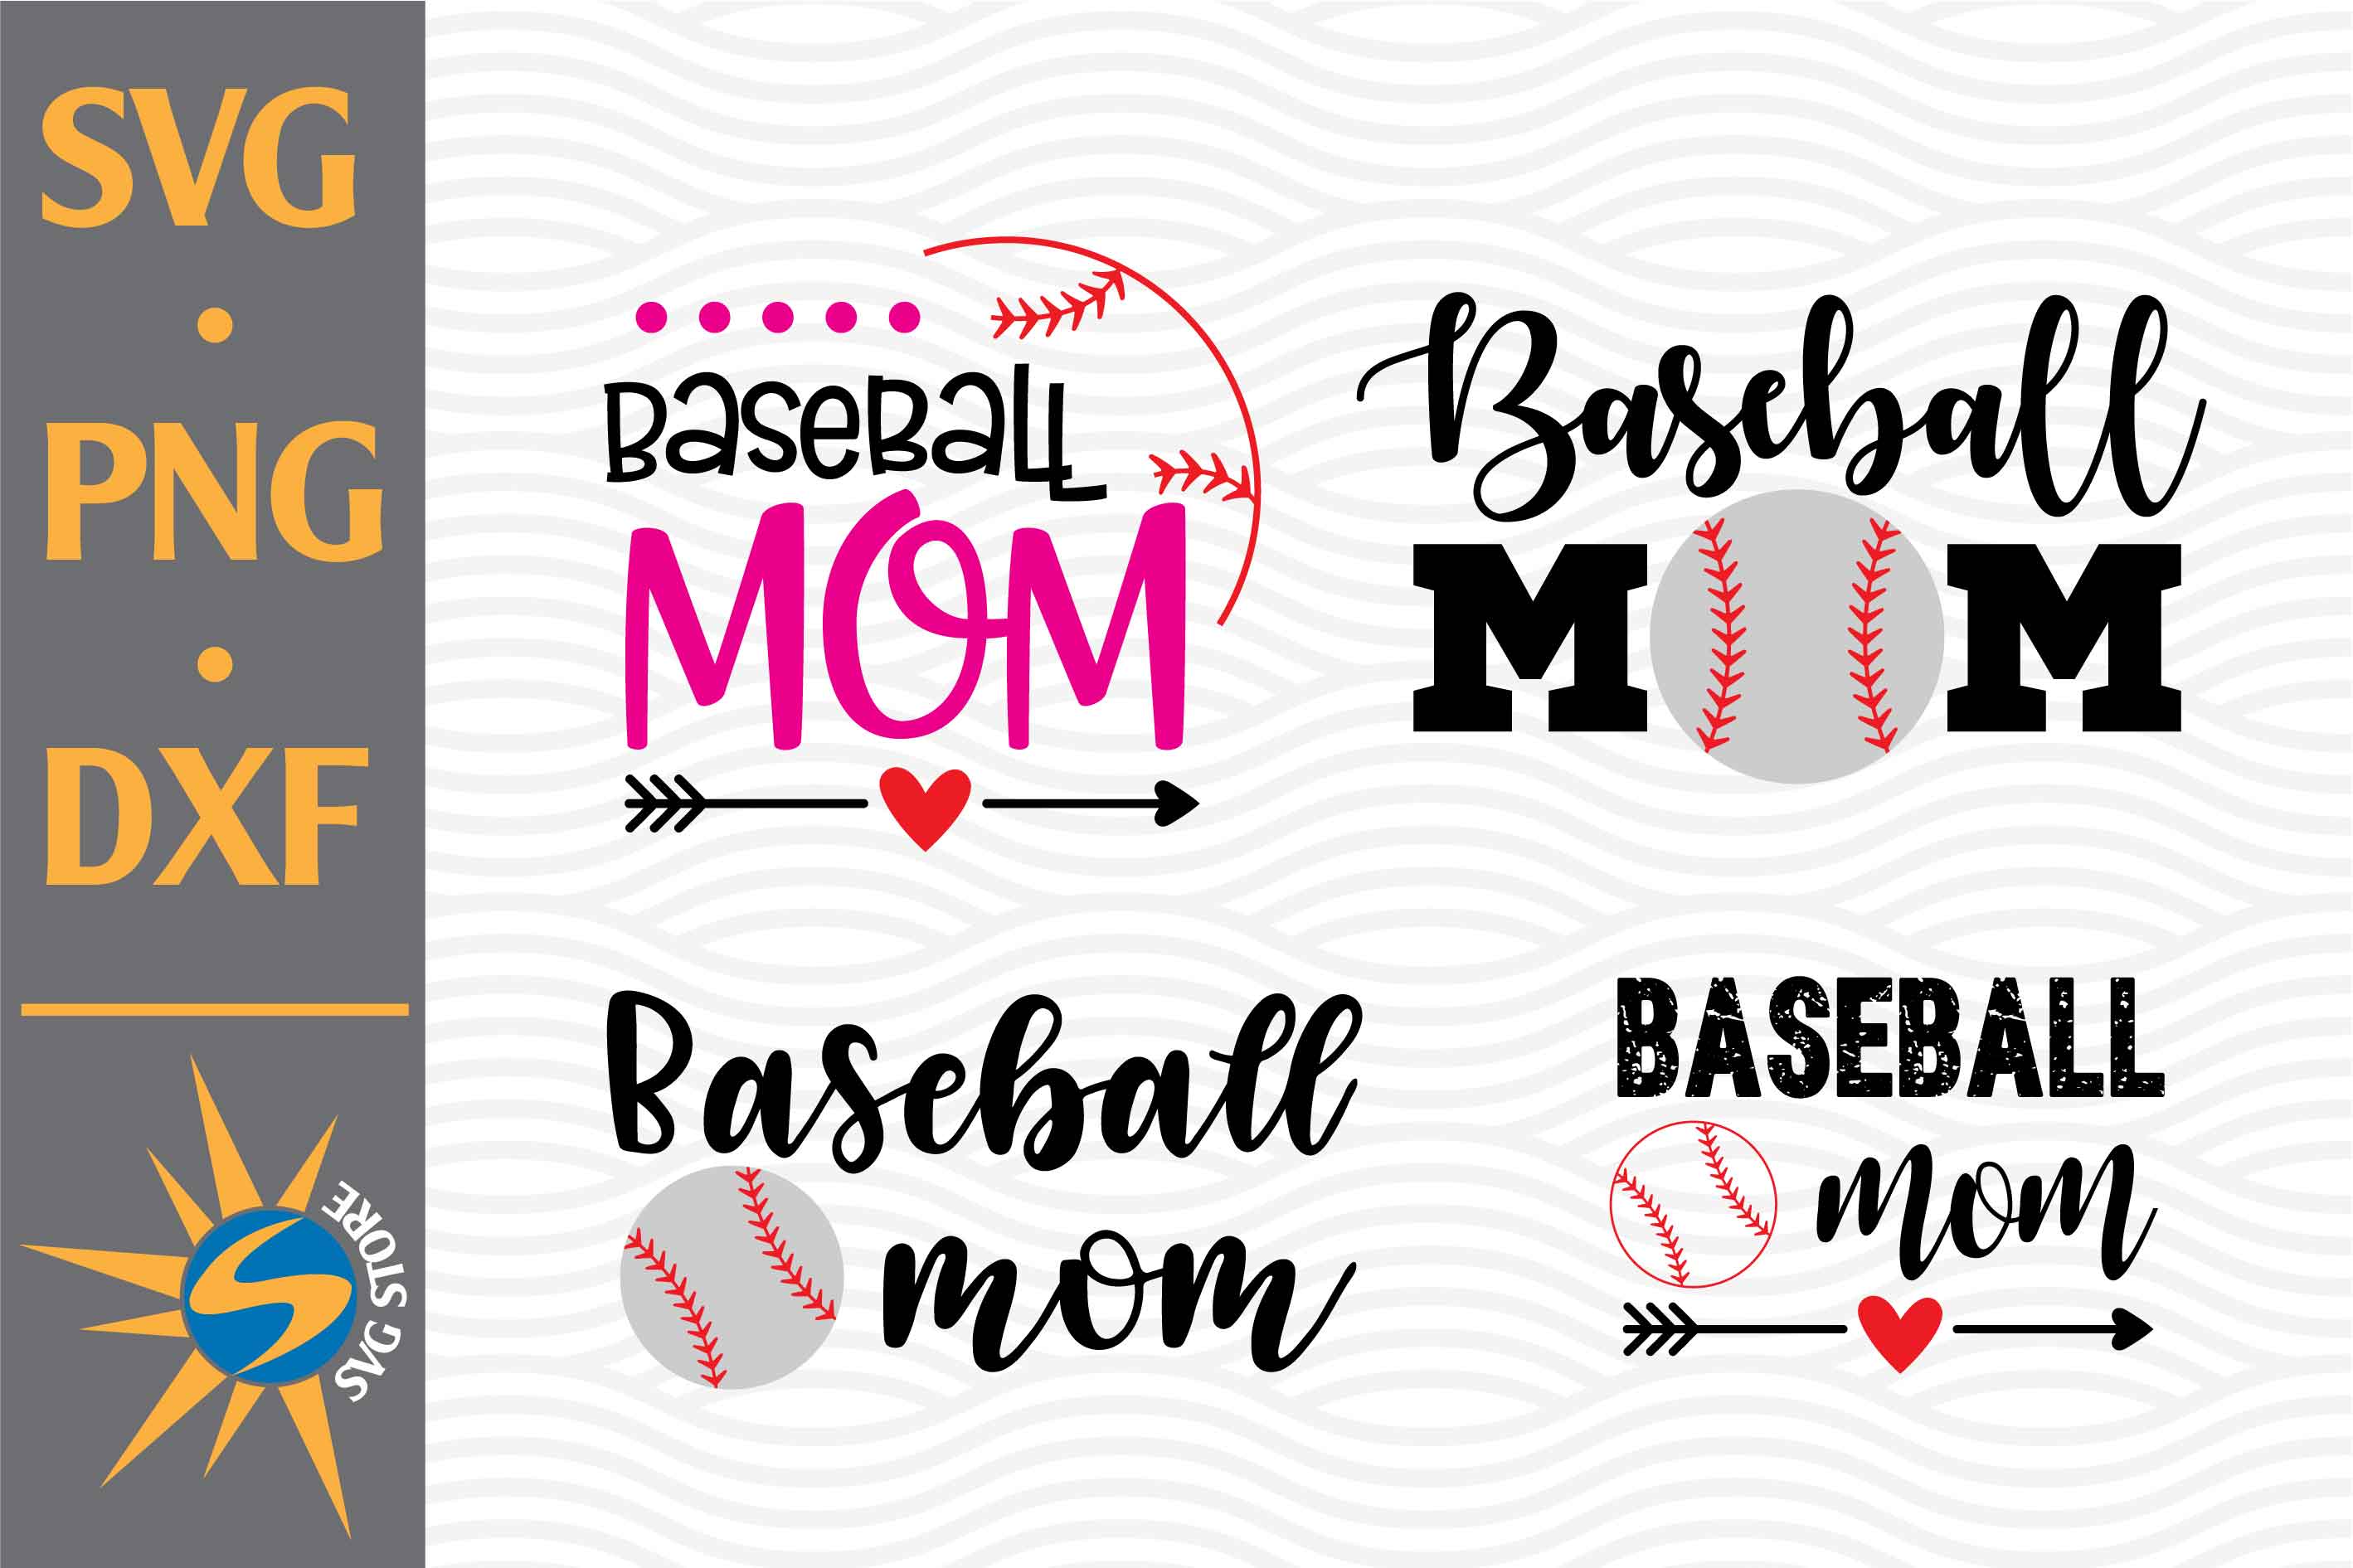 Baseball mom graphic by svgstoreshop